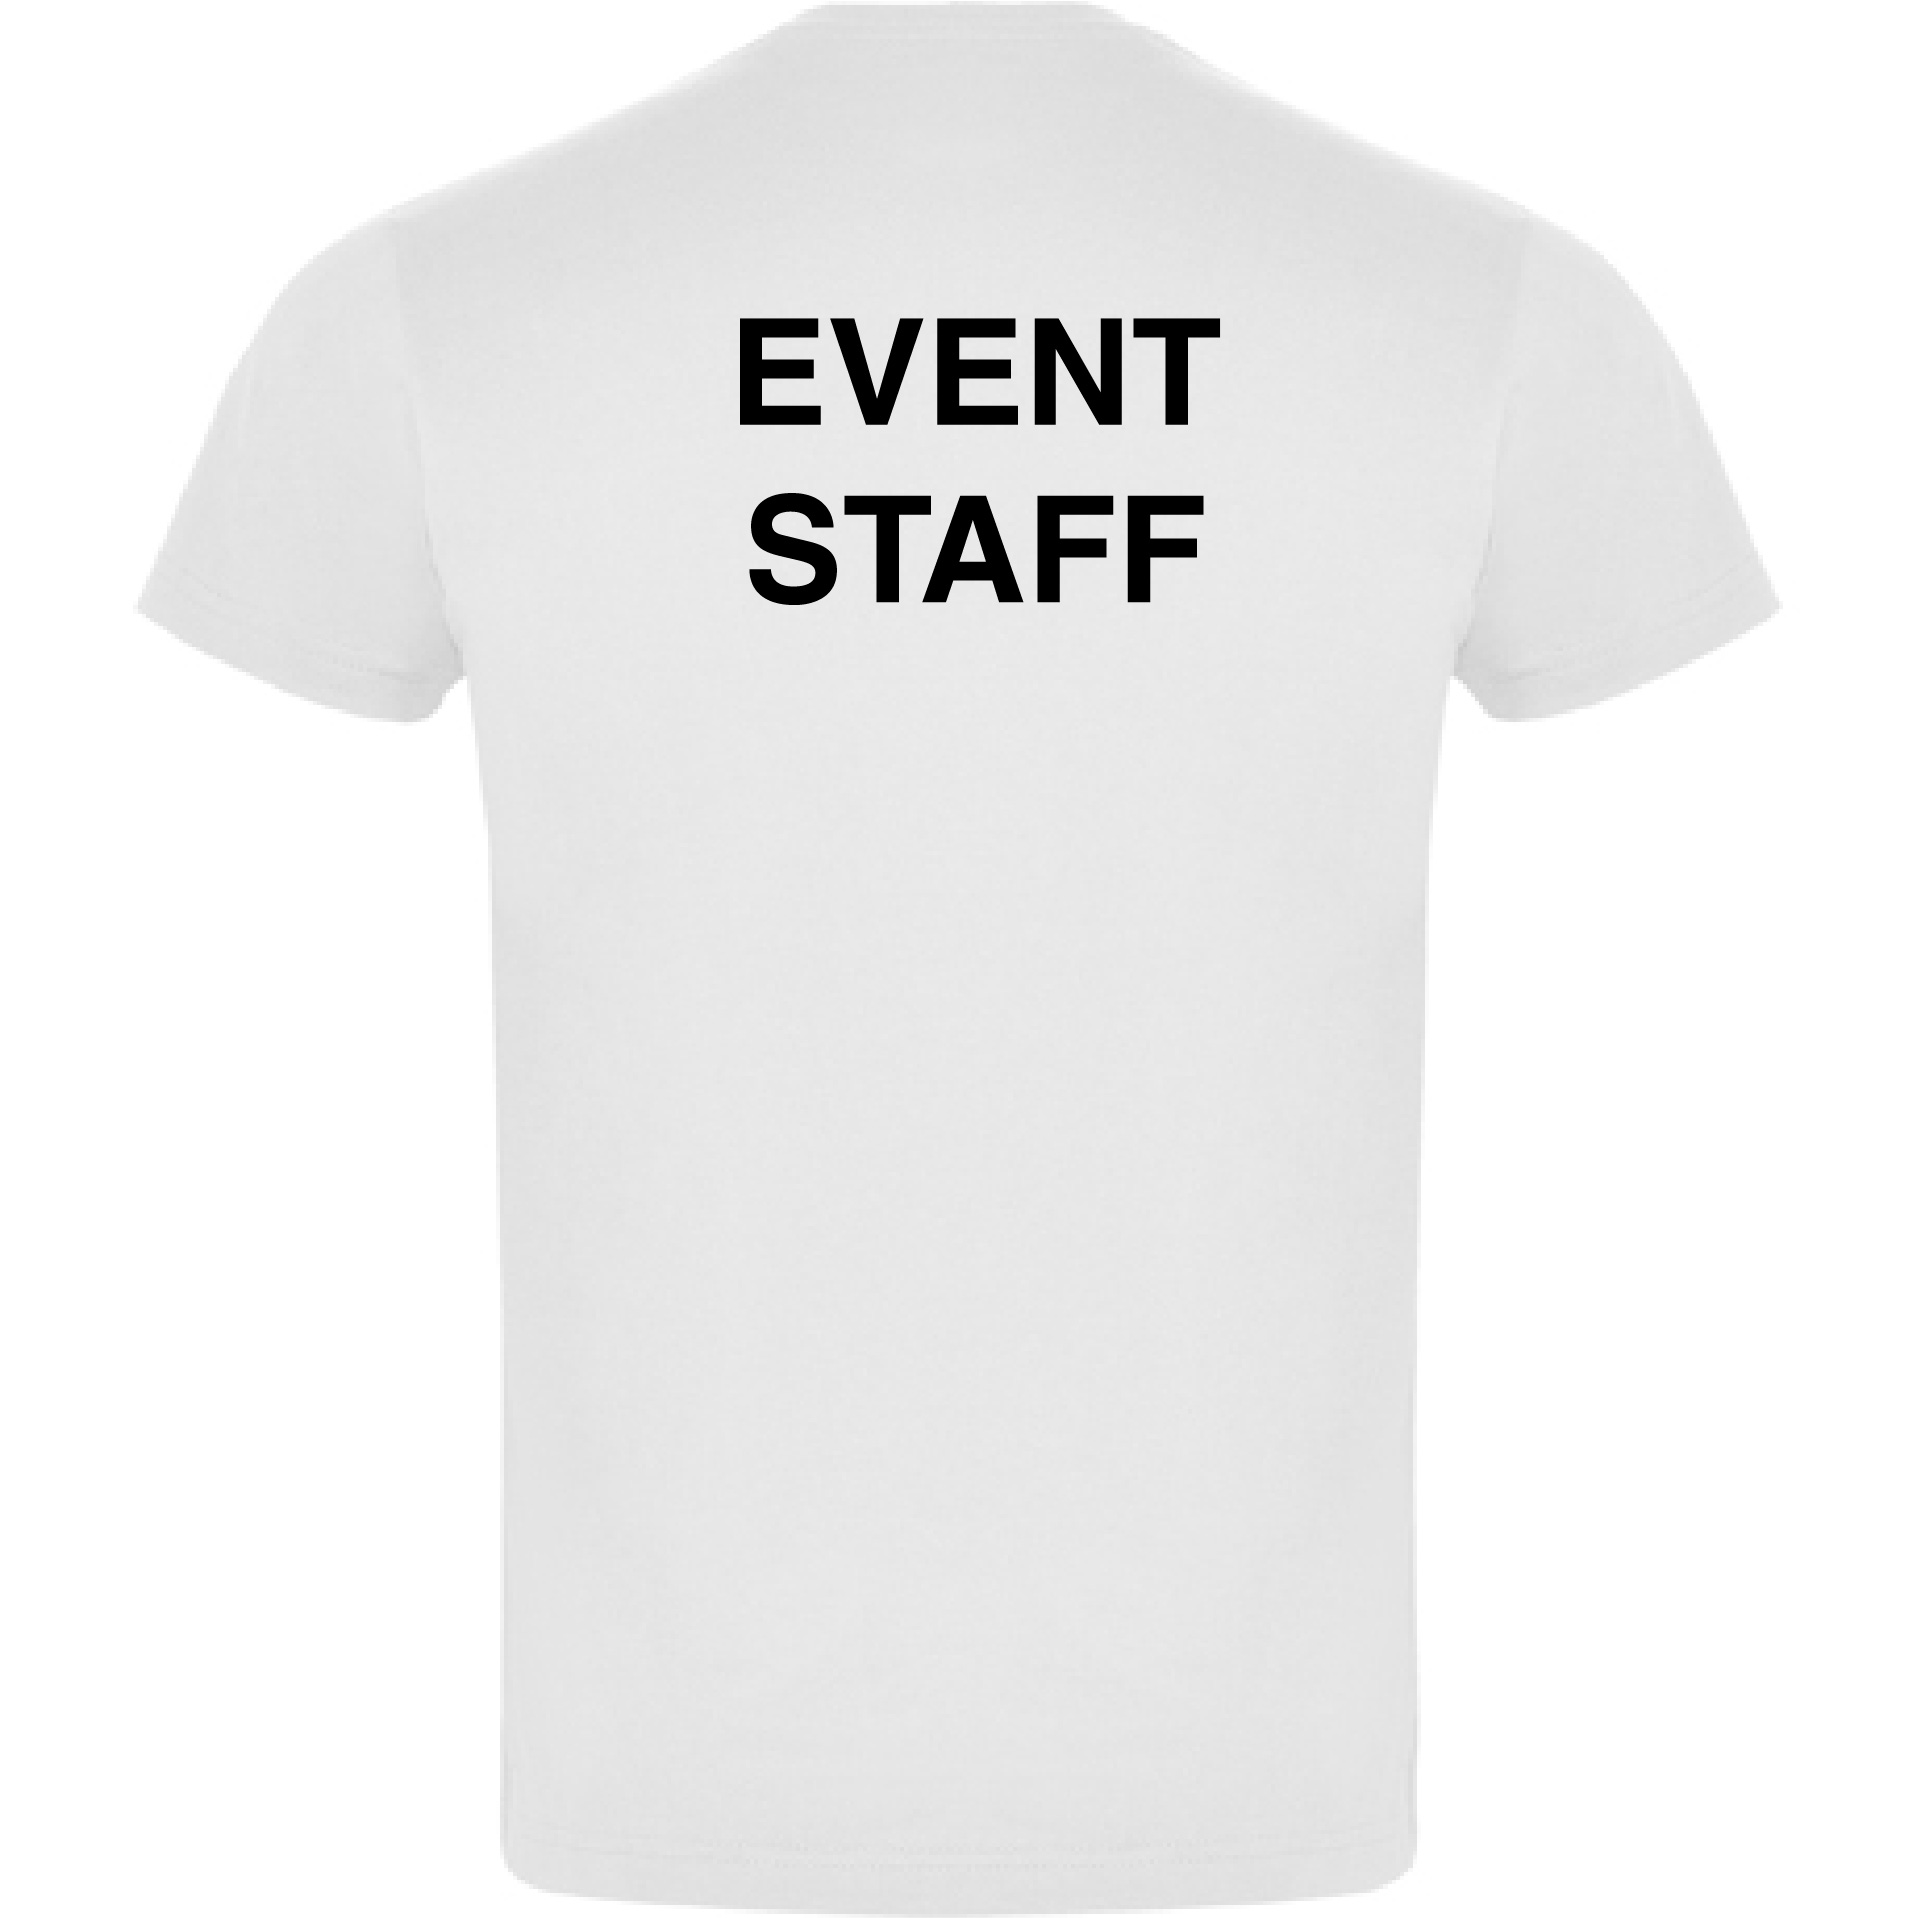 638017878879049084_t-shirt_event-staff_back_white.jpg